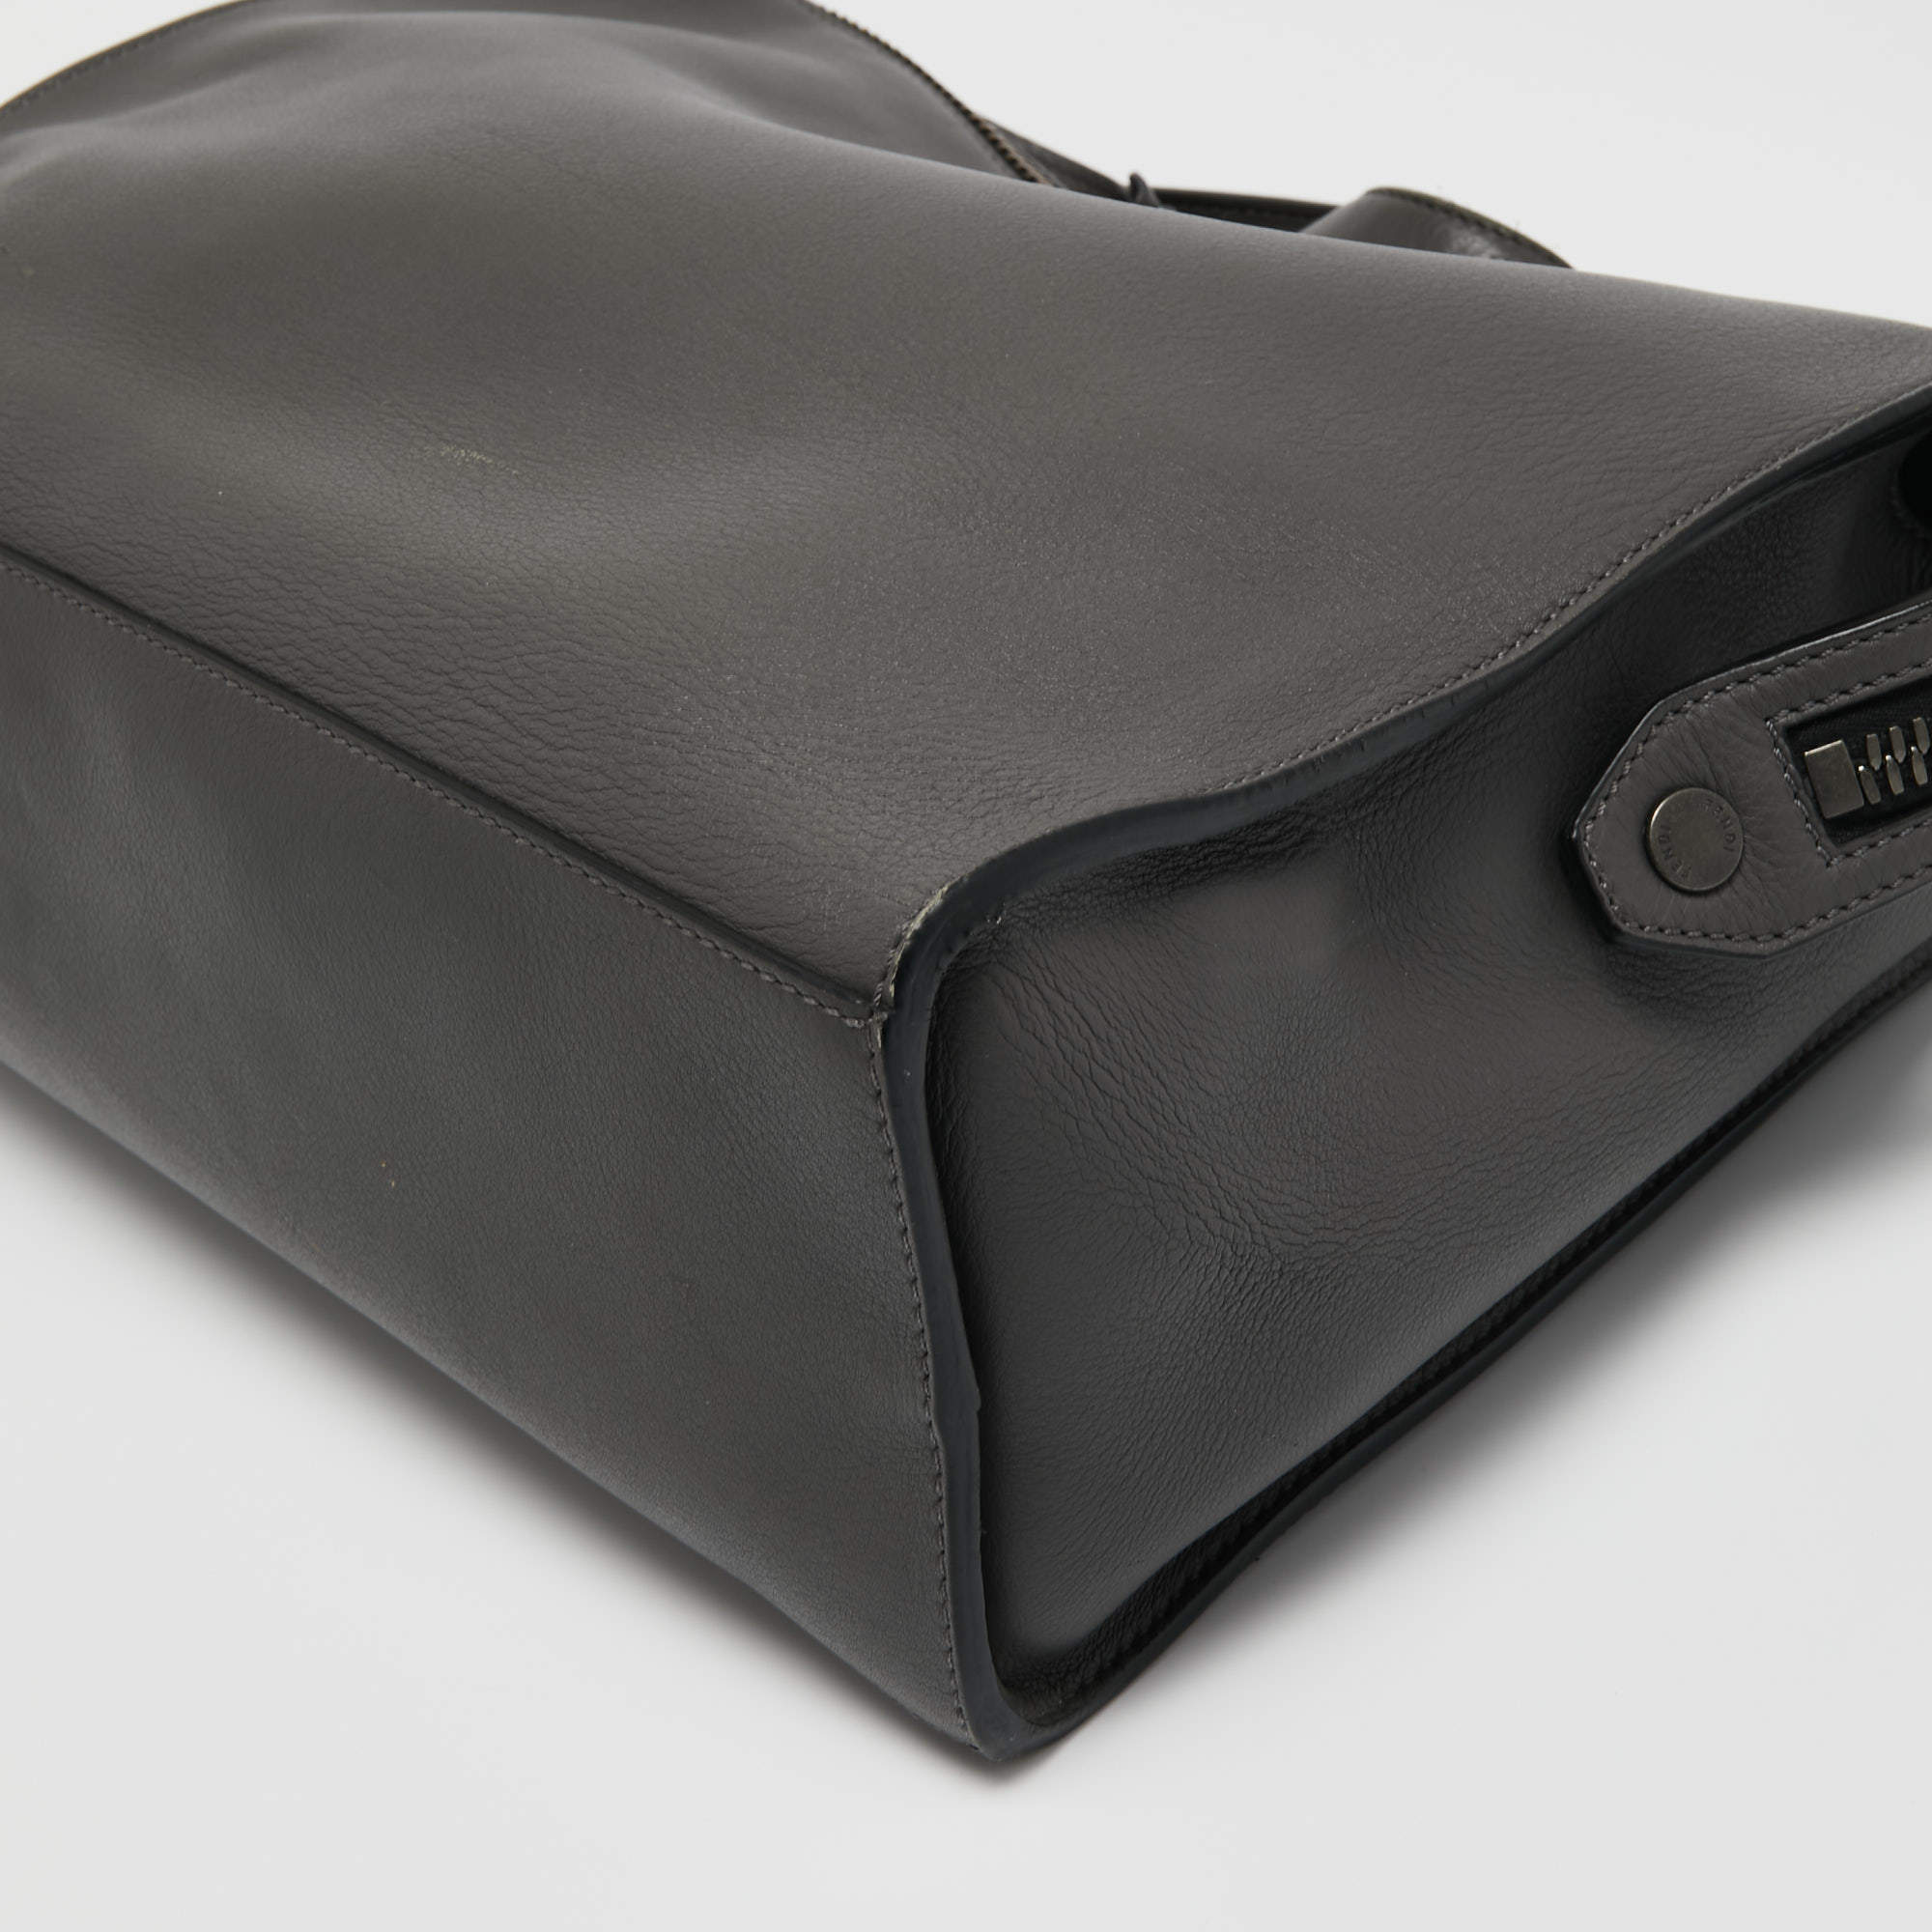 Jual Fendi Lui Grey Selleria Leather Messenger Bag di lapak Celio Closet